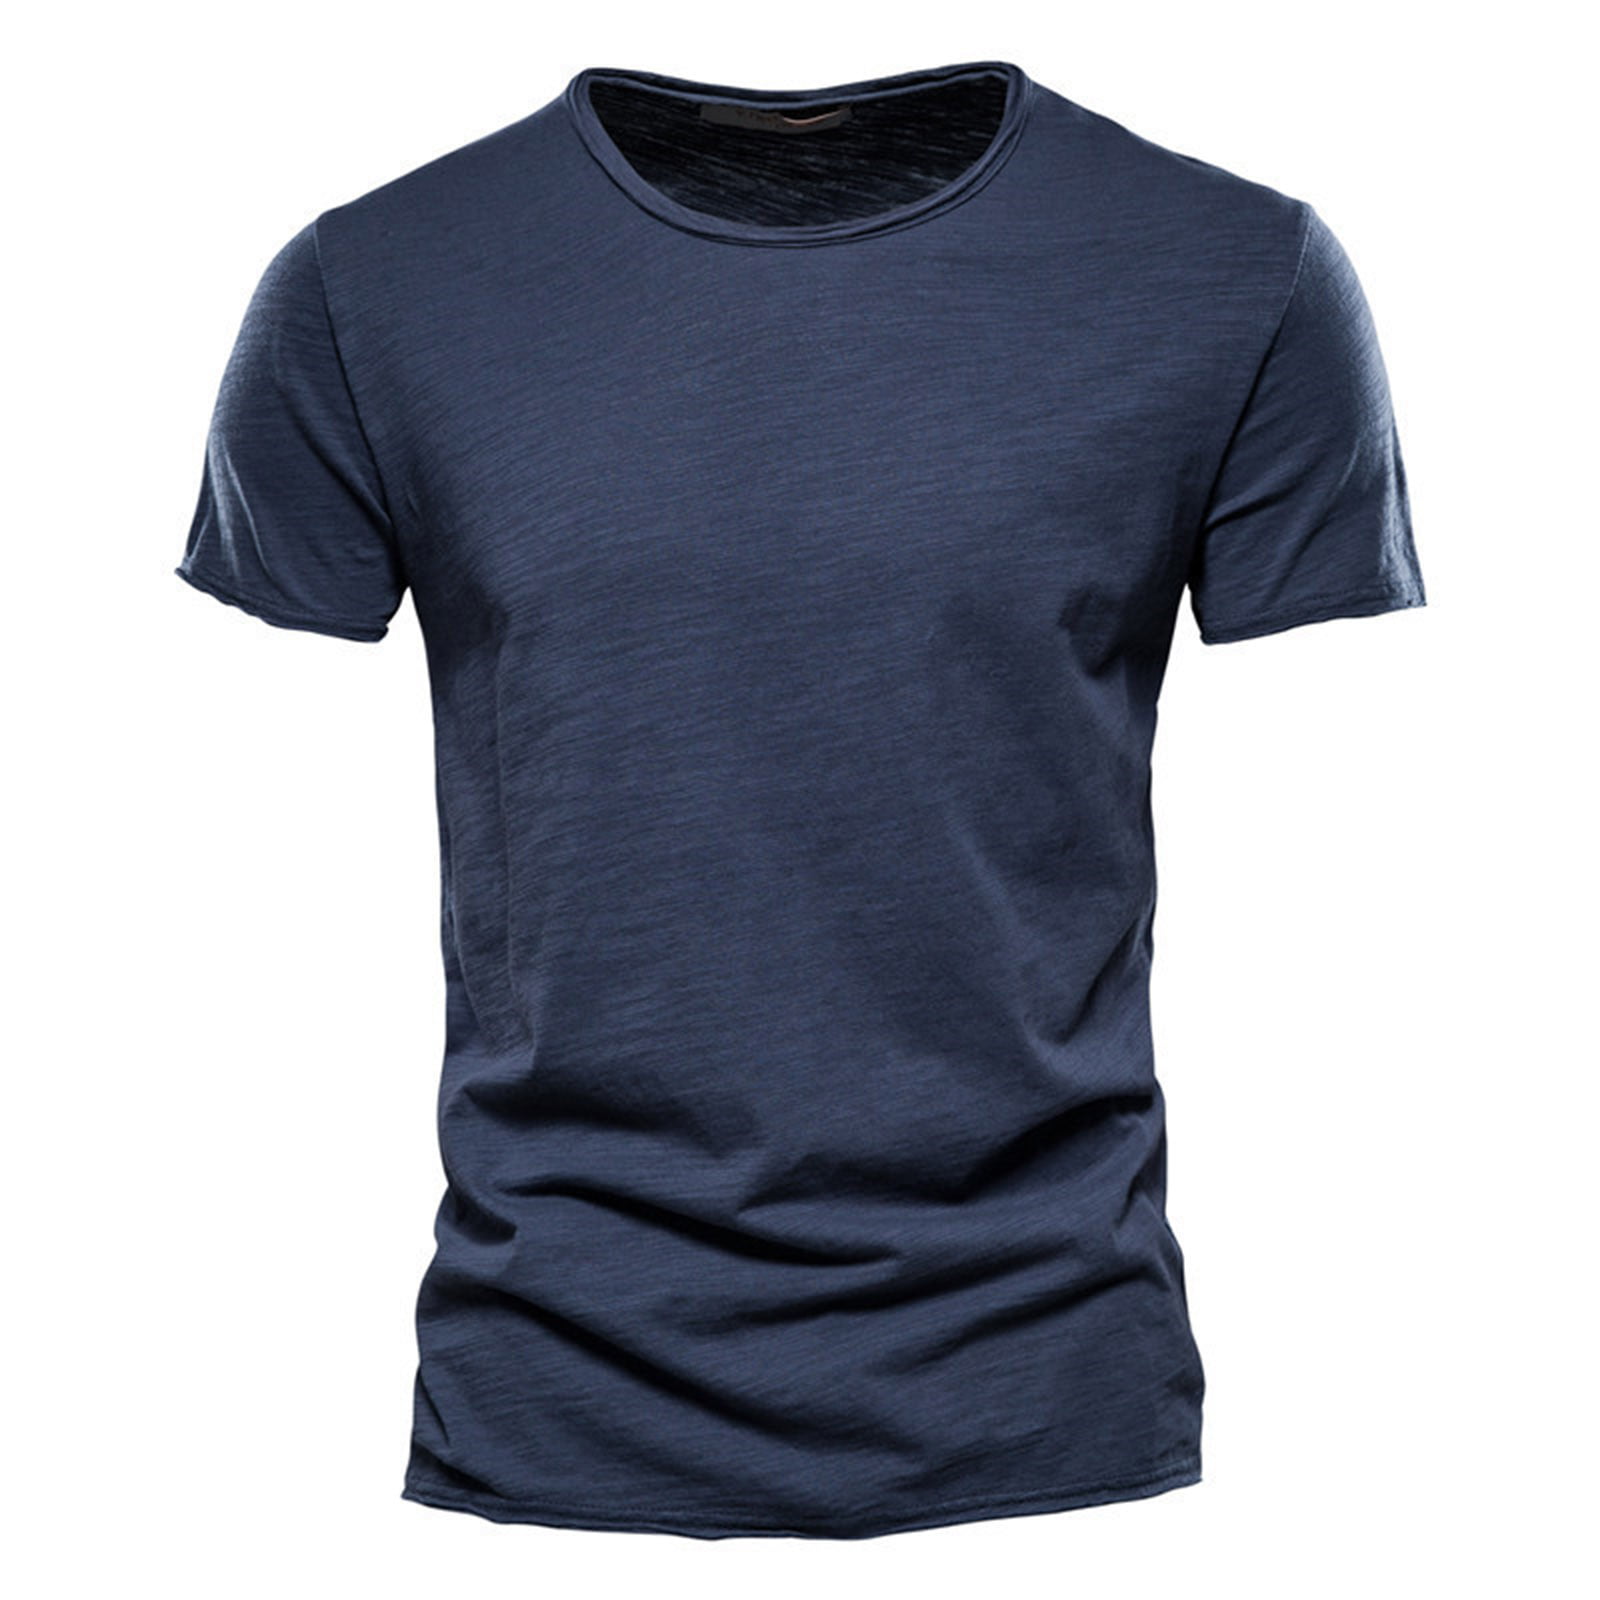 WUWUQF Mens Tshirts Short Sleeve Cotton Color T-Shirt Comfortable ...